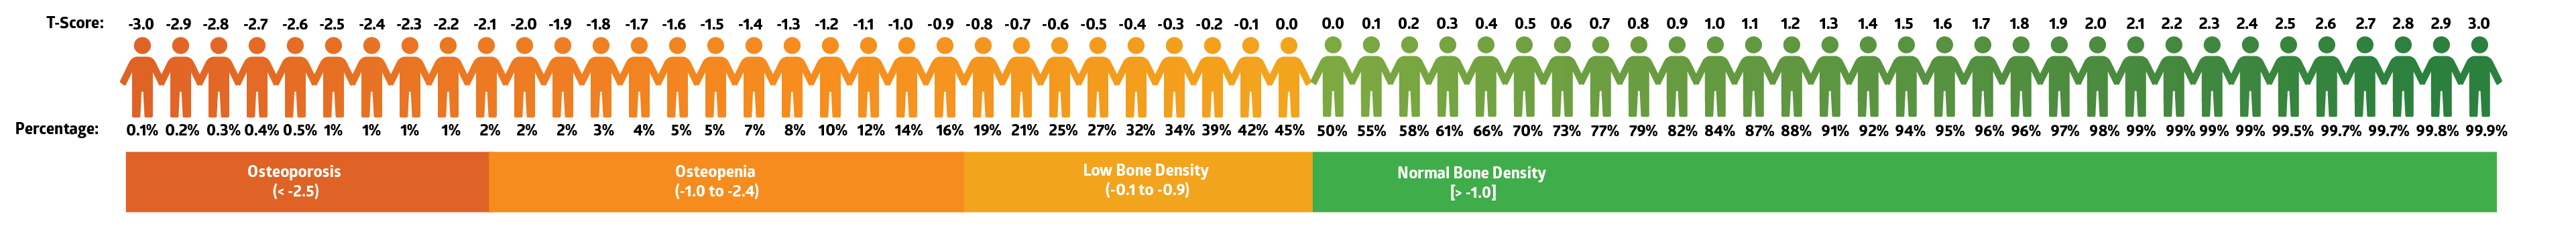 Bone Density Test Results Chart